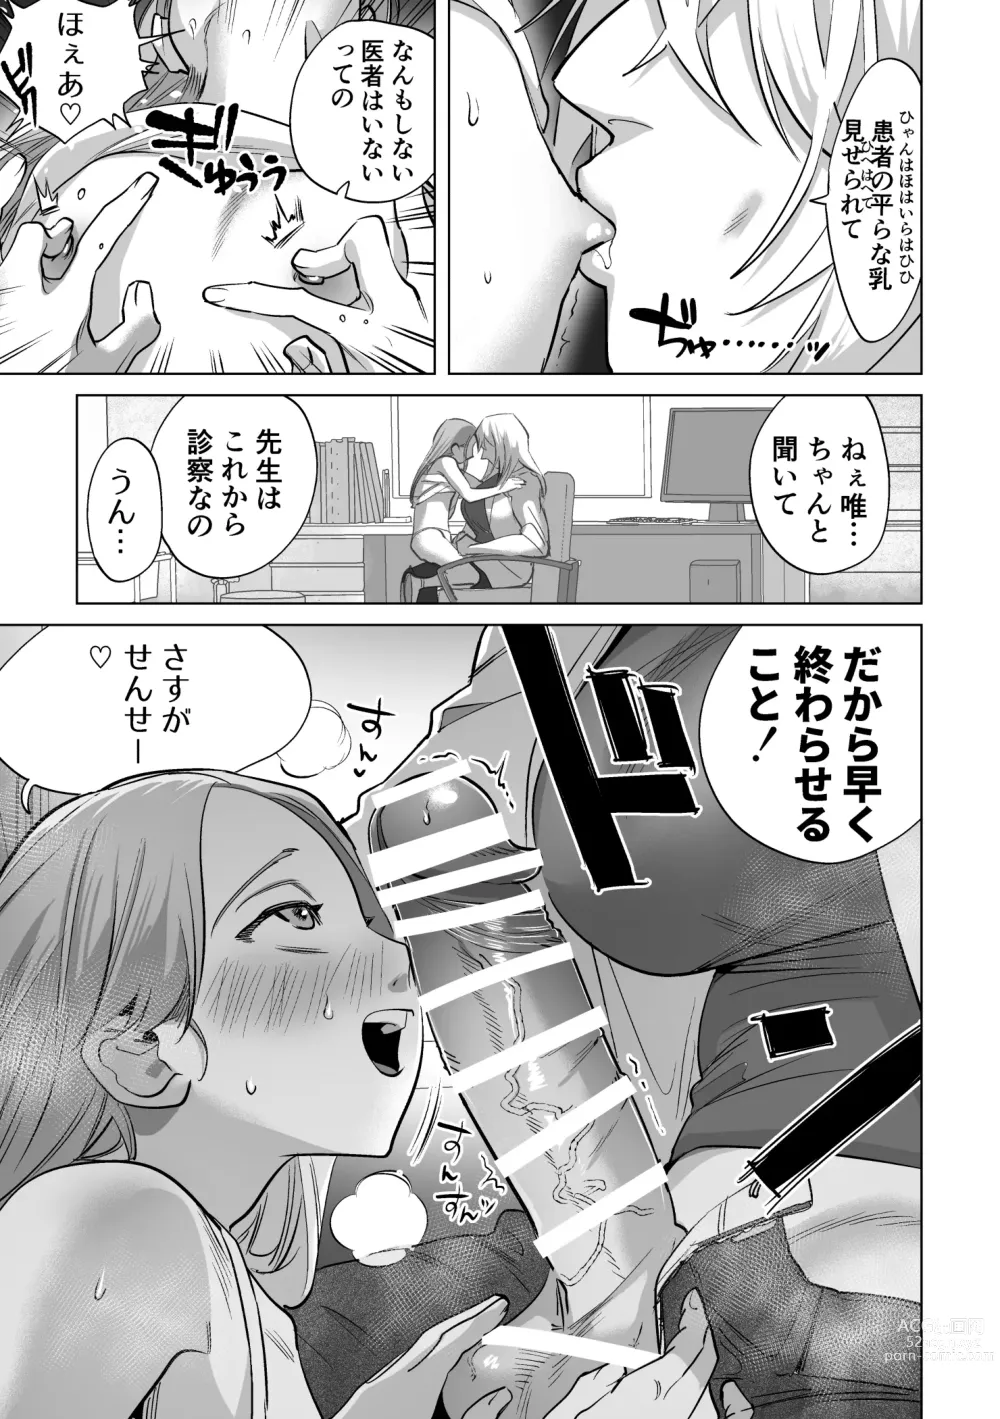 Page 4 of doujinshi 30-Funkan hitasura Ecchi